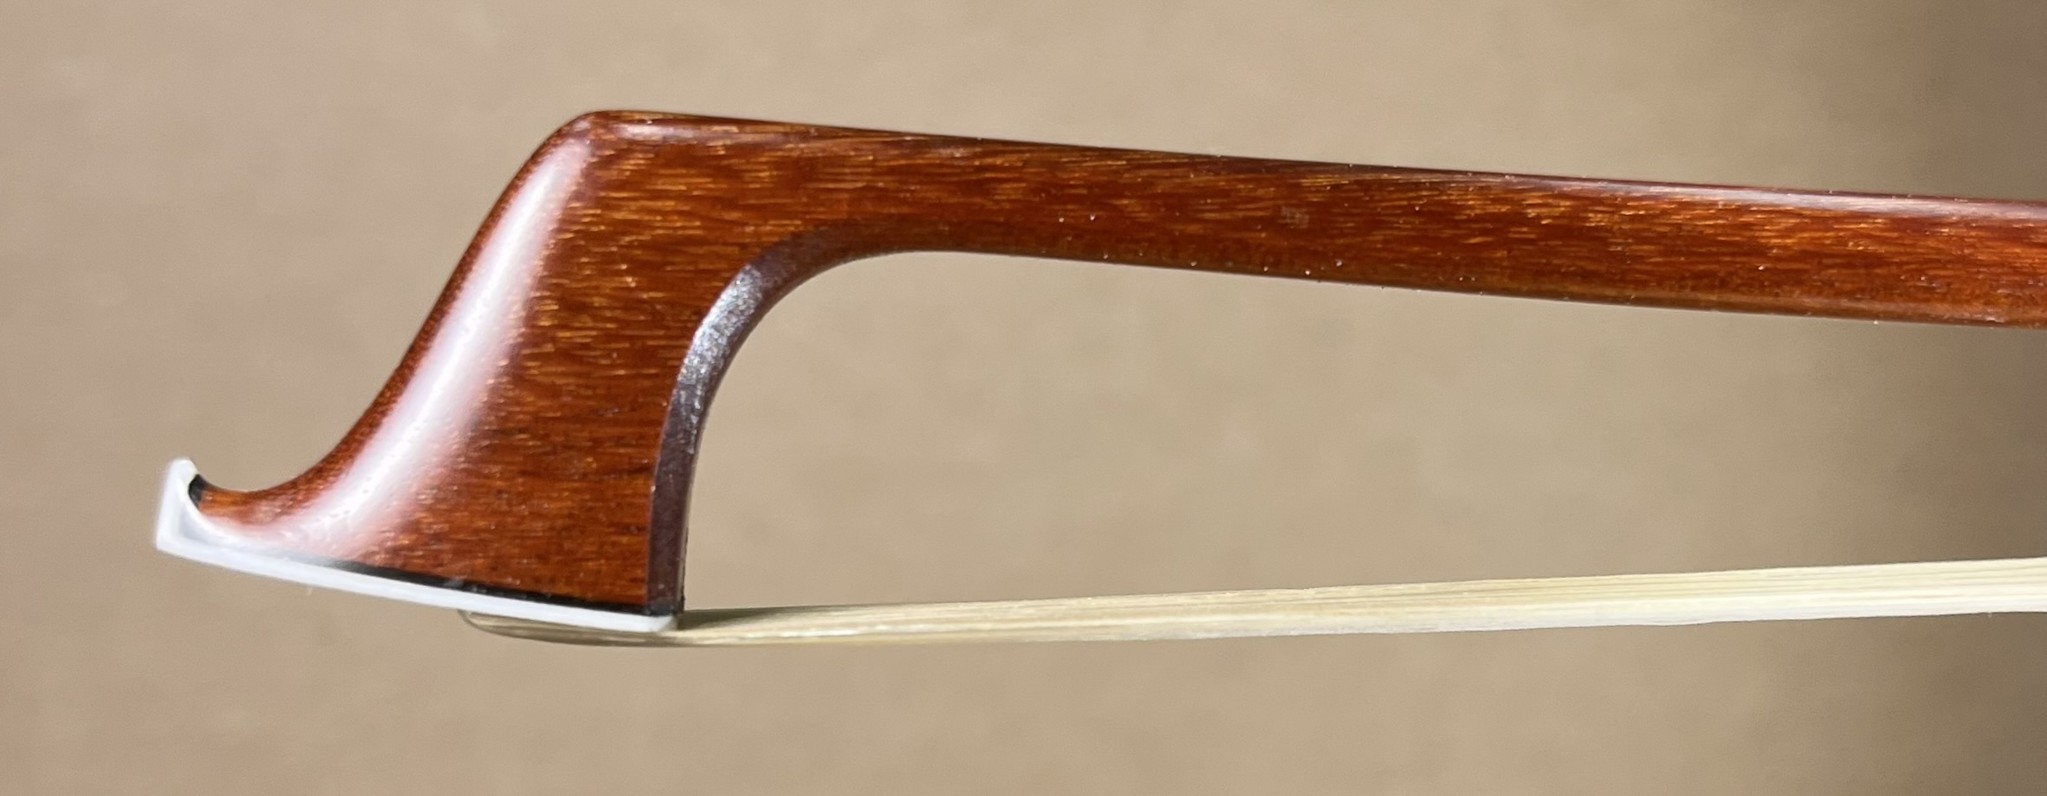 L. GUTHRIE violin bow, round pernambuco stick, plain premium polished ebony frog, tinsel/silver, 61.5g